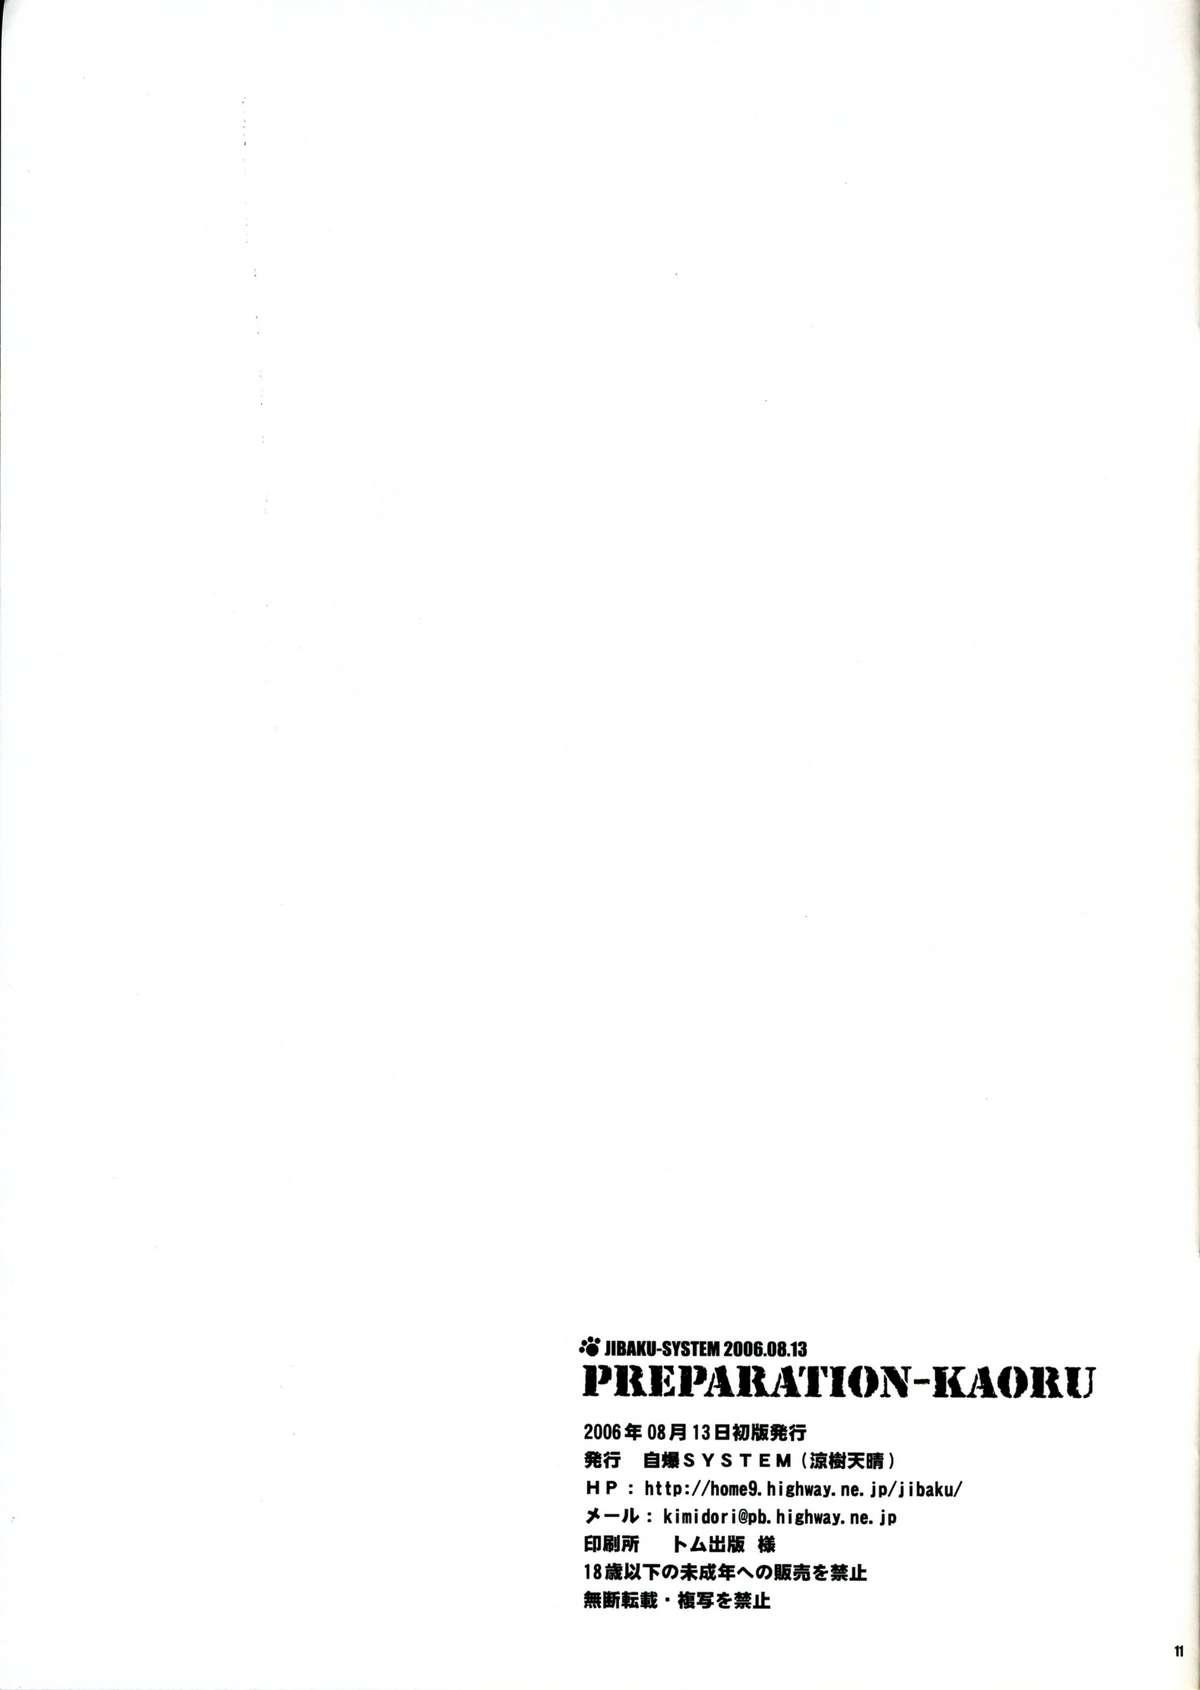 PREPARATION-KAORU 10